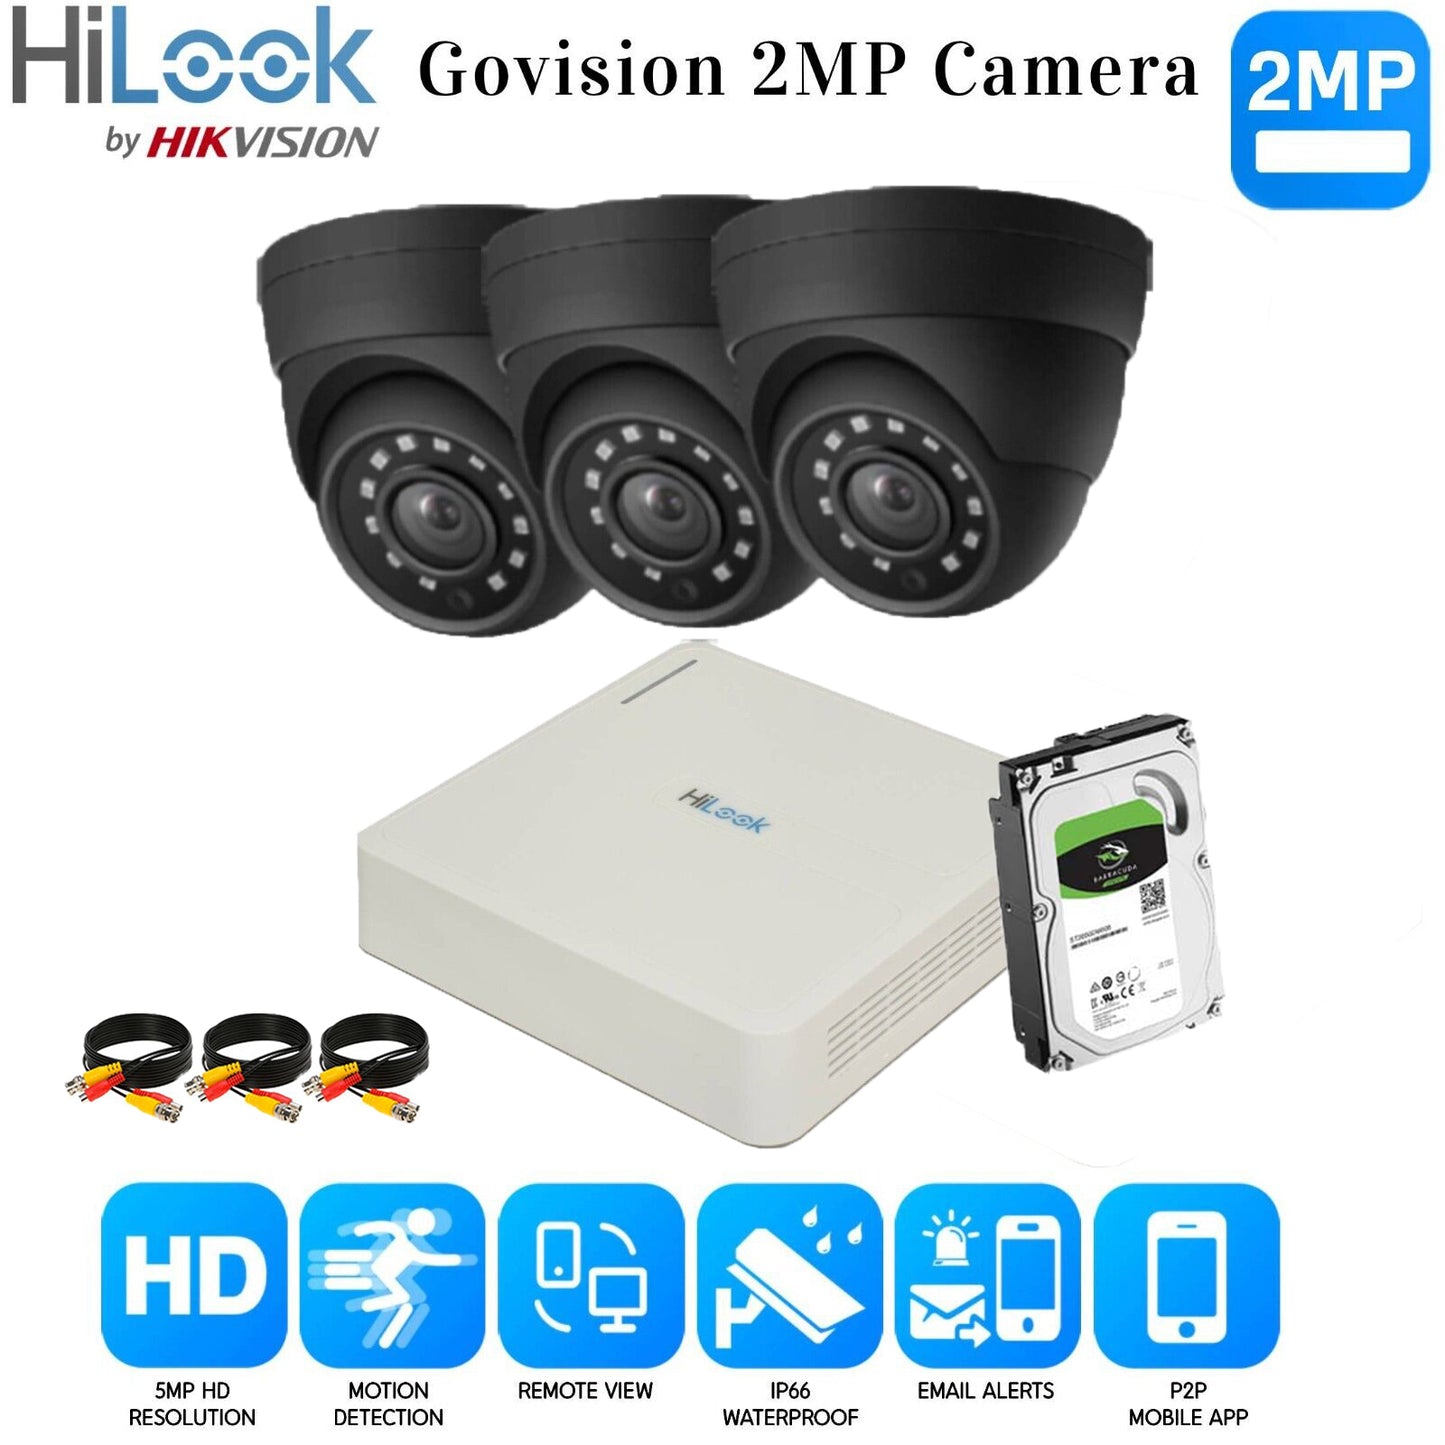 Hikvision Home Outdoor CCTV Security Camera System Kit HD 1080P 4CH DVR IR NIGHT 4CH DVR 3xCameras (gray) 1TB HDD